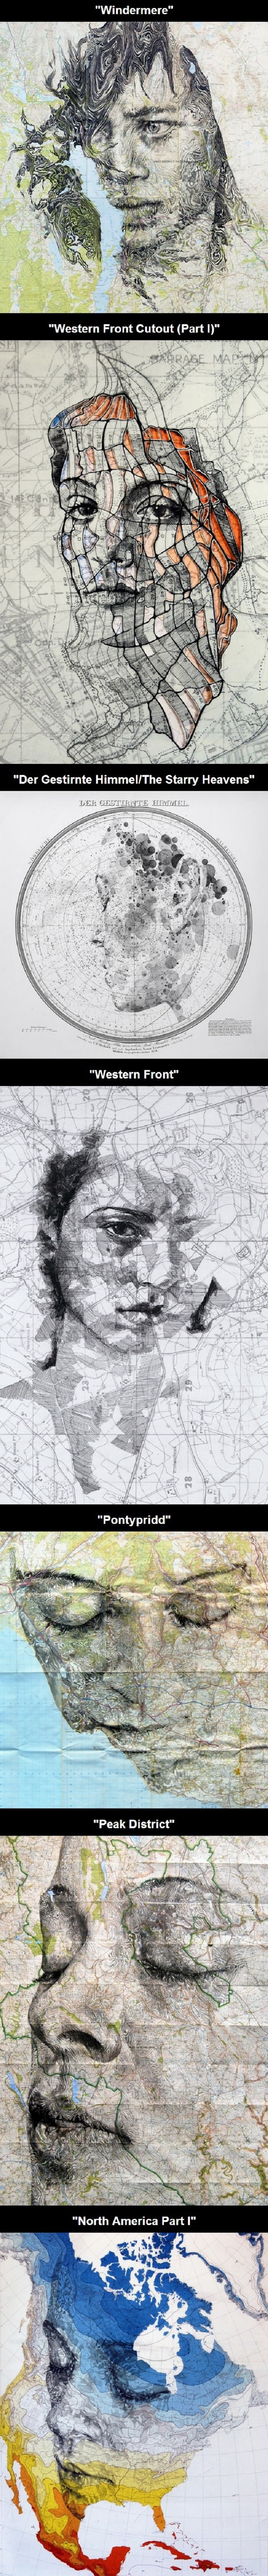 Portraits on maps